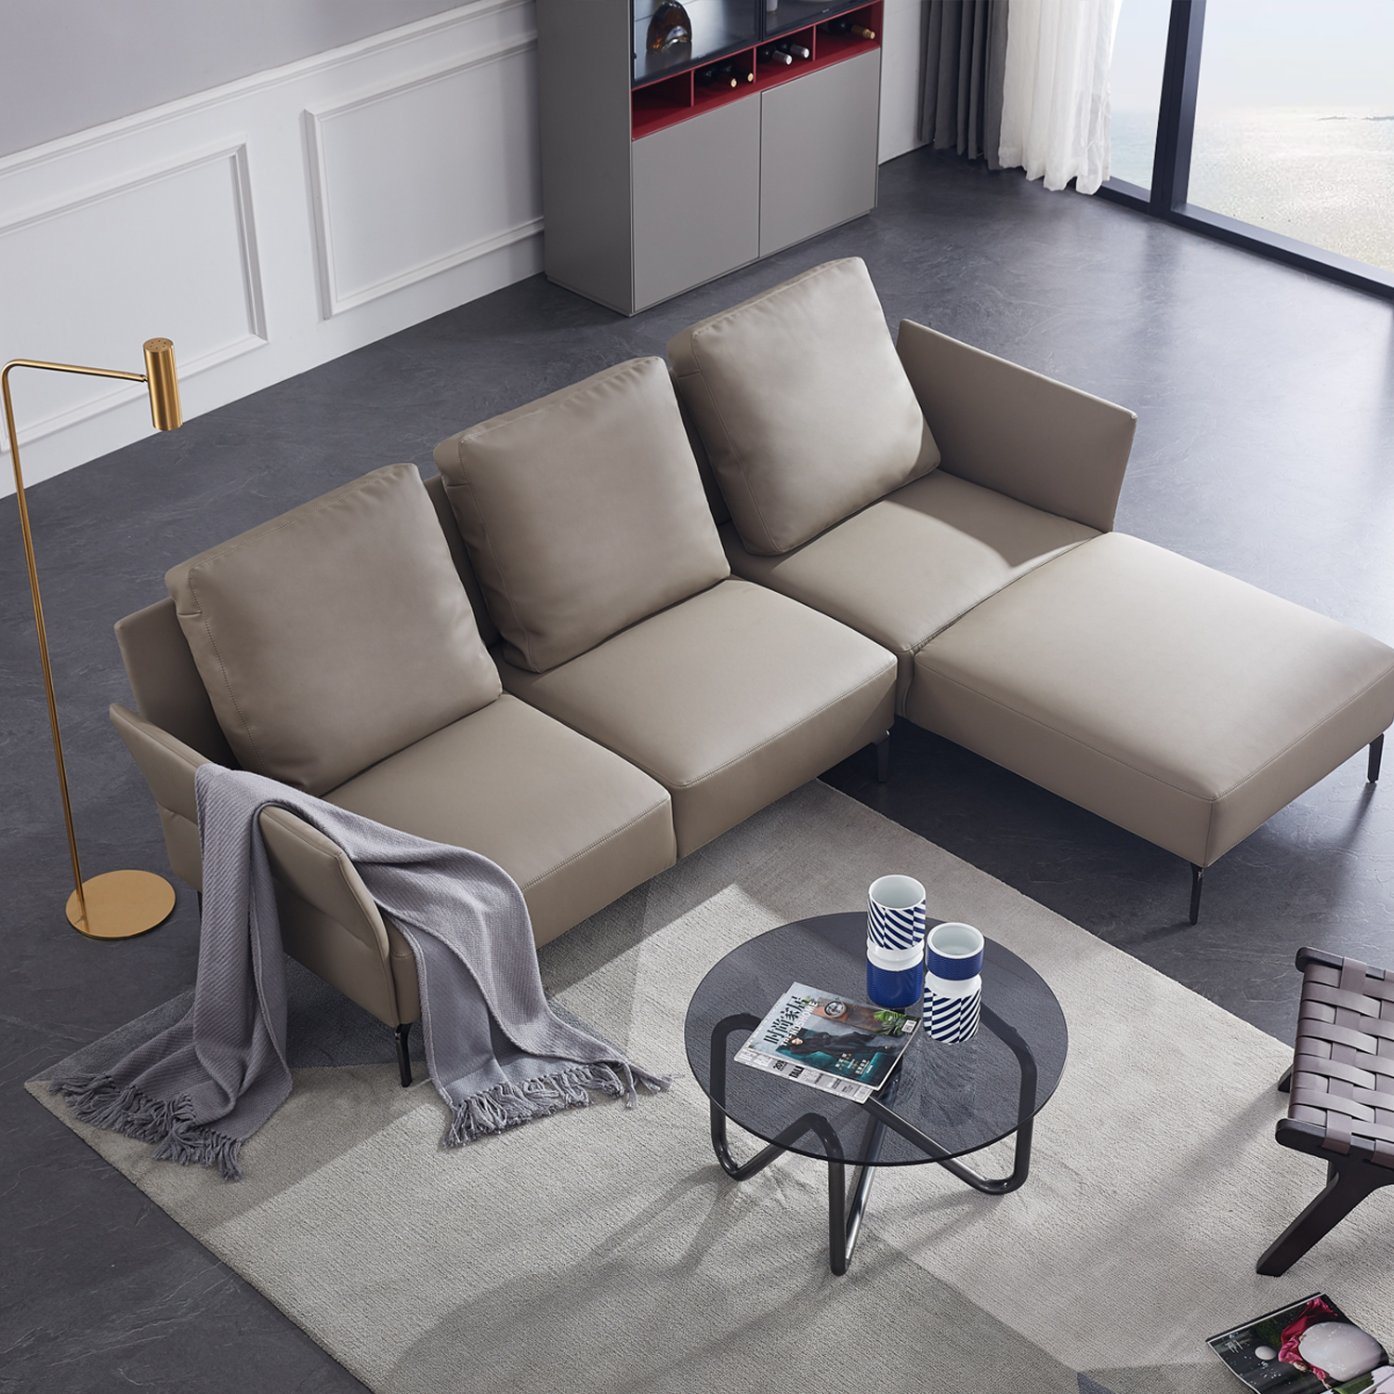 2020 Design High Quality Technology Nano Leather Modern Sofa Furniture